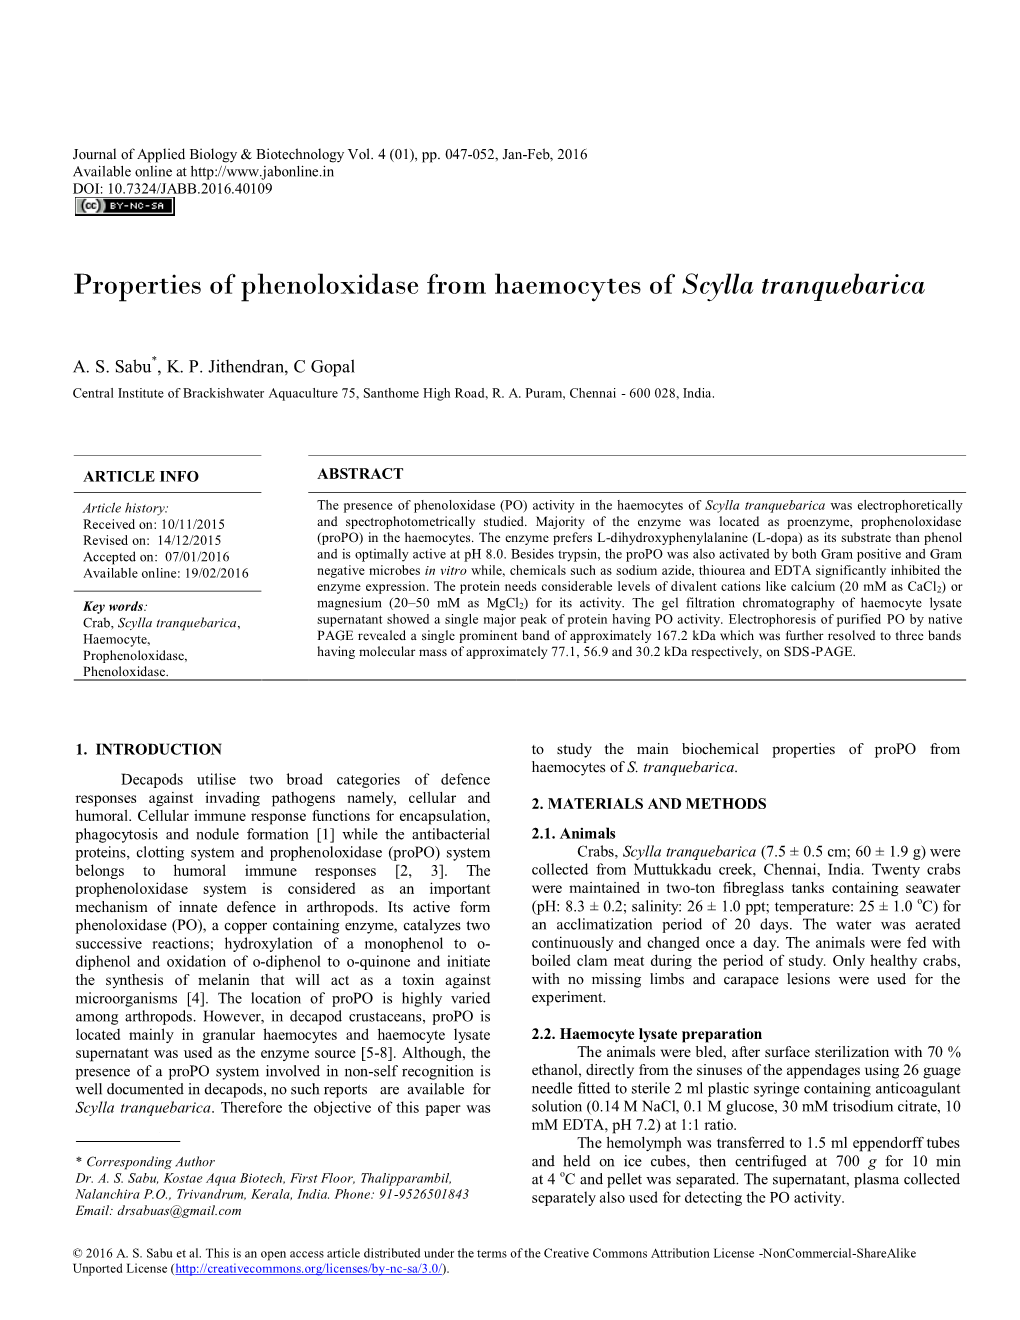 Properties of Phenoloxidase from Haemocytes of Scylla Tranquebarica